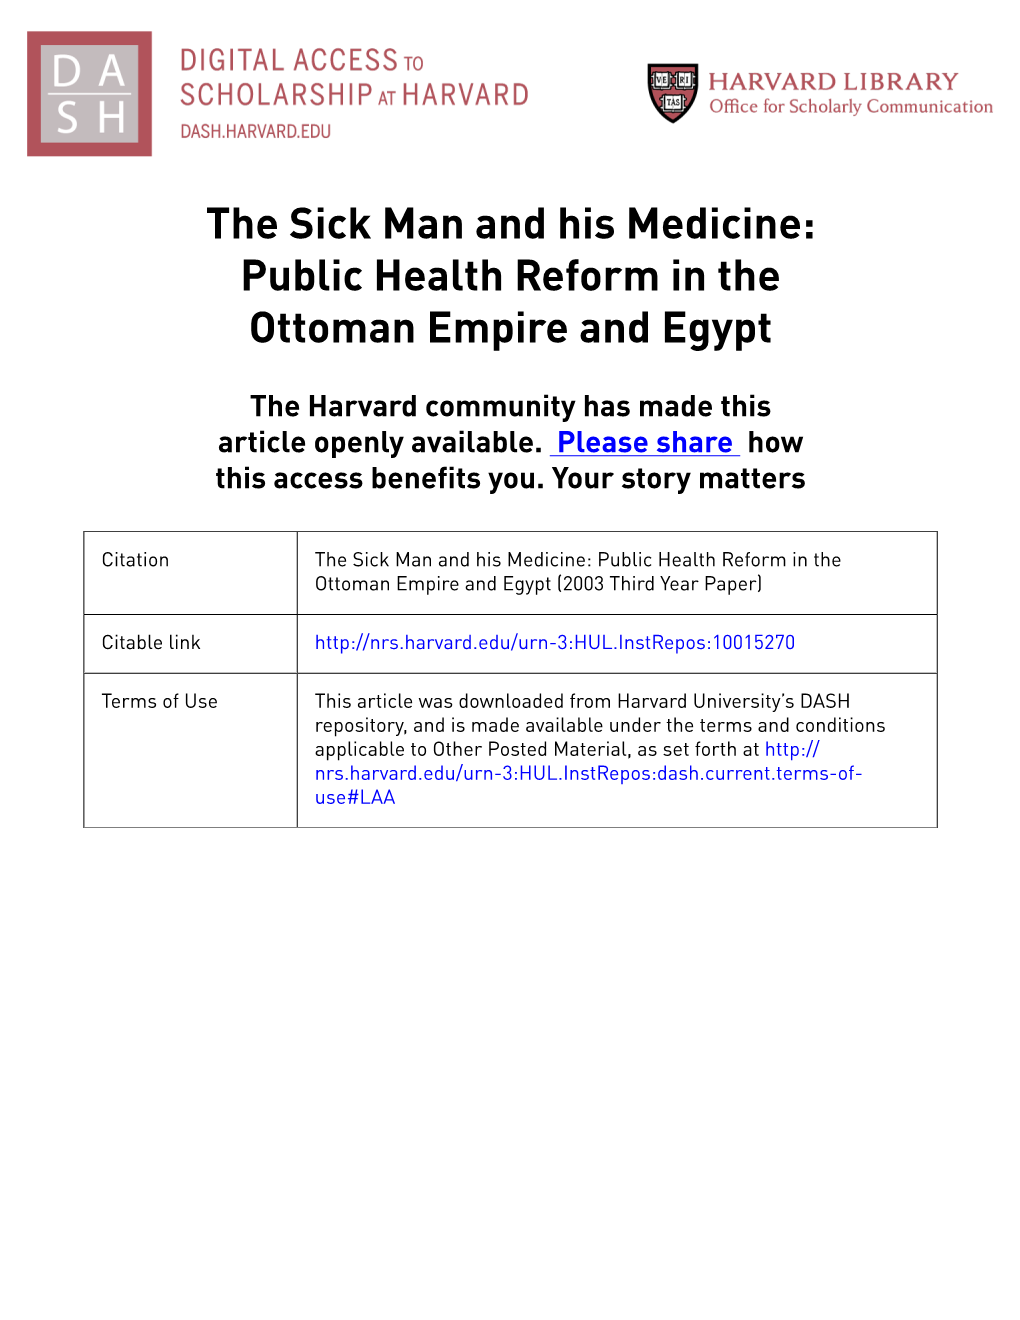 Public Health Reform in the Ottoman Empire and Egypt